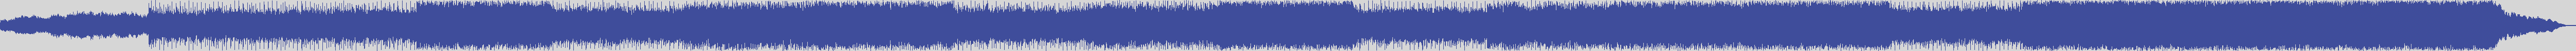 upr [UPR074] Container 47 - Defluxion [Original Mix] audio wave form